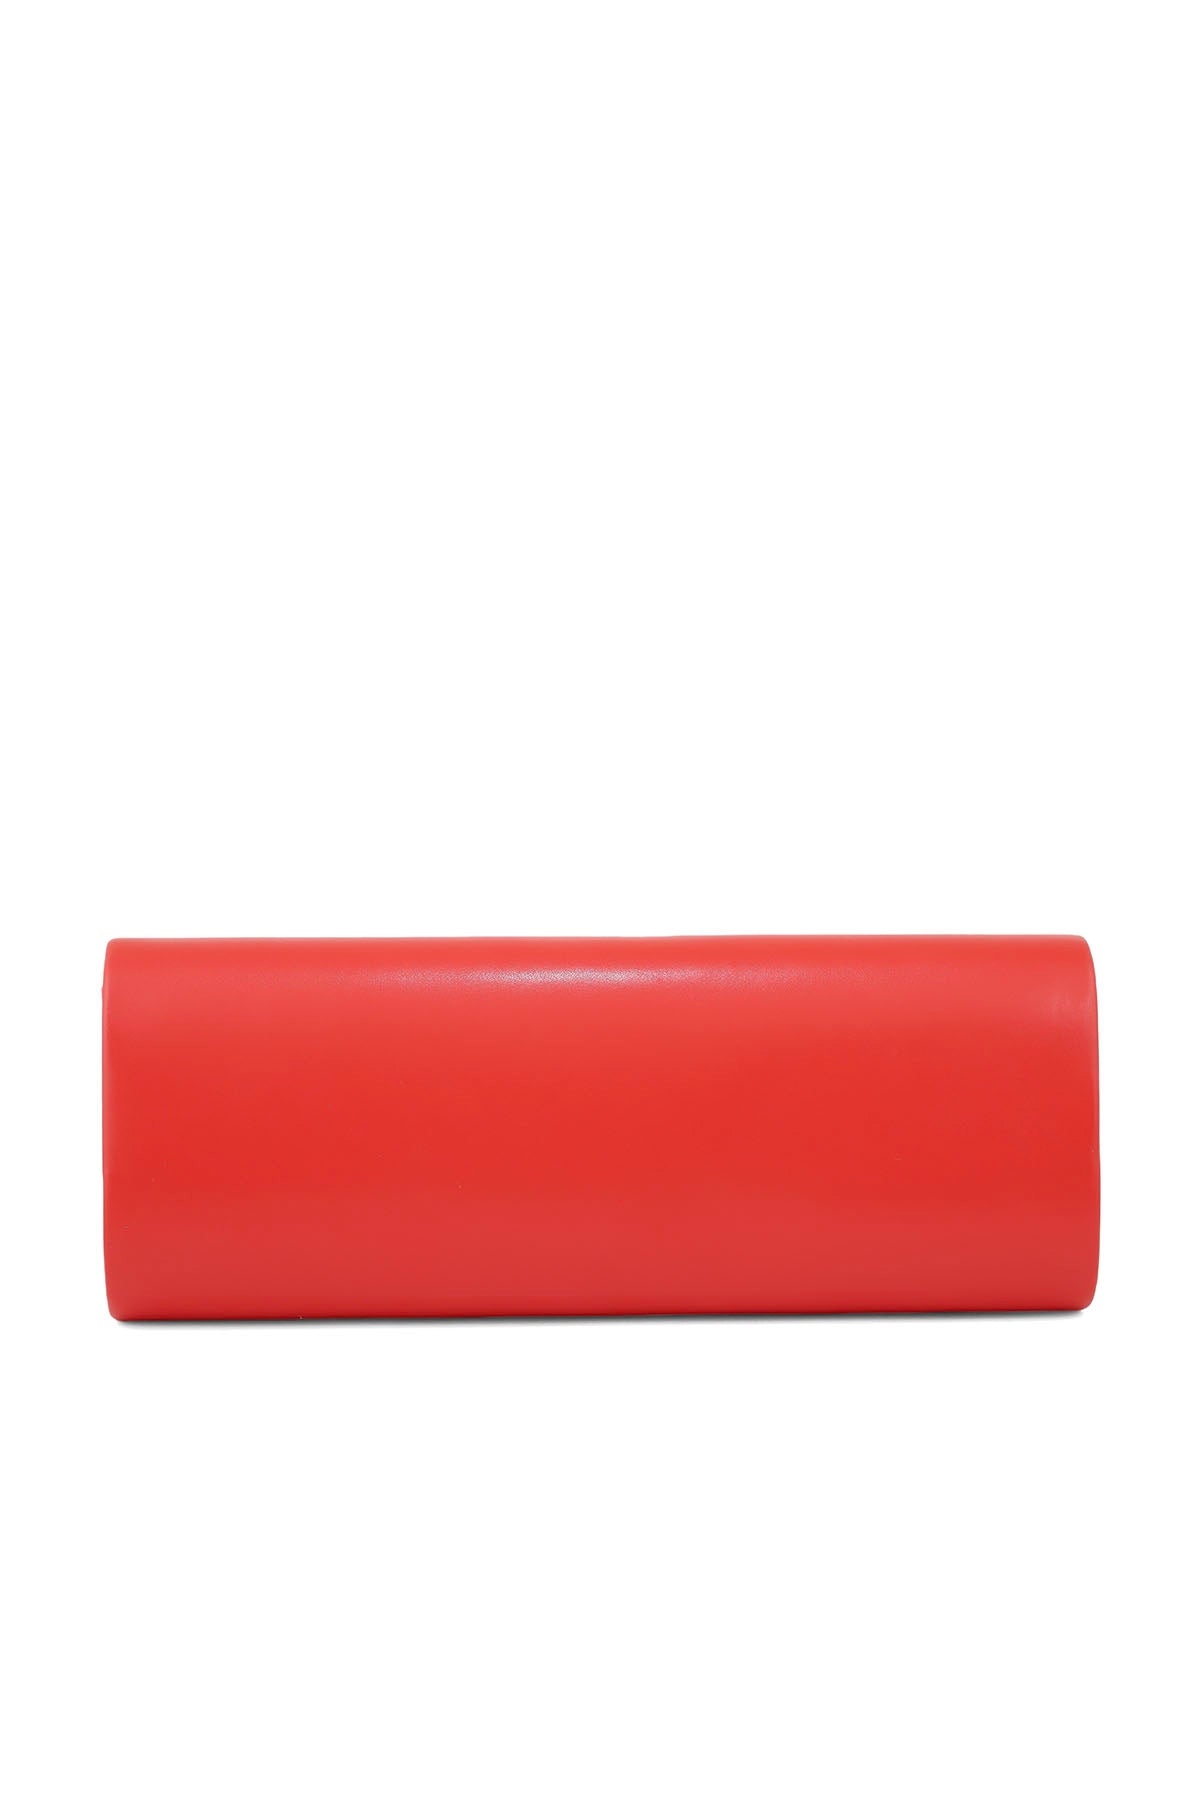 Envelope Clutch B21544-Red